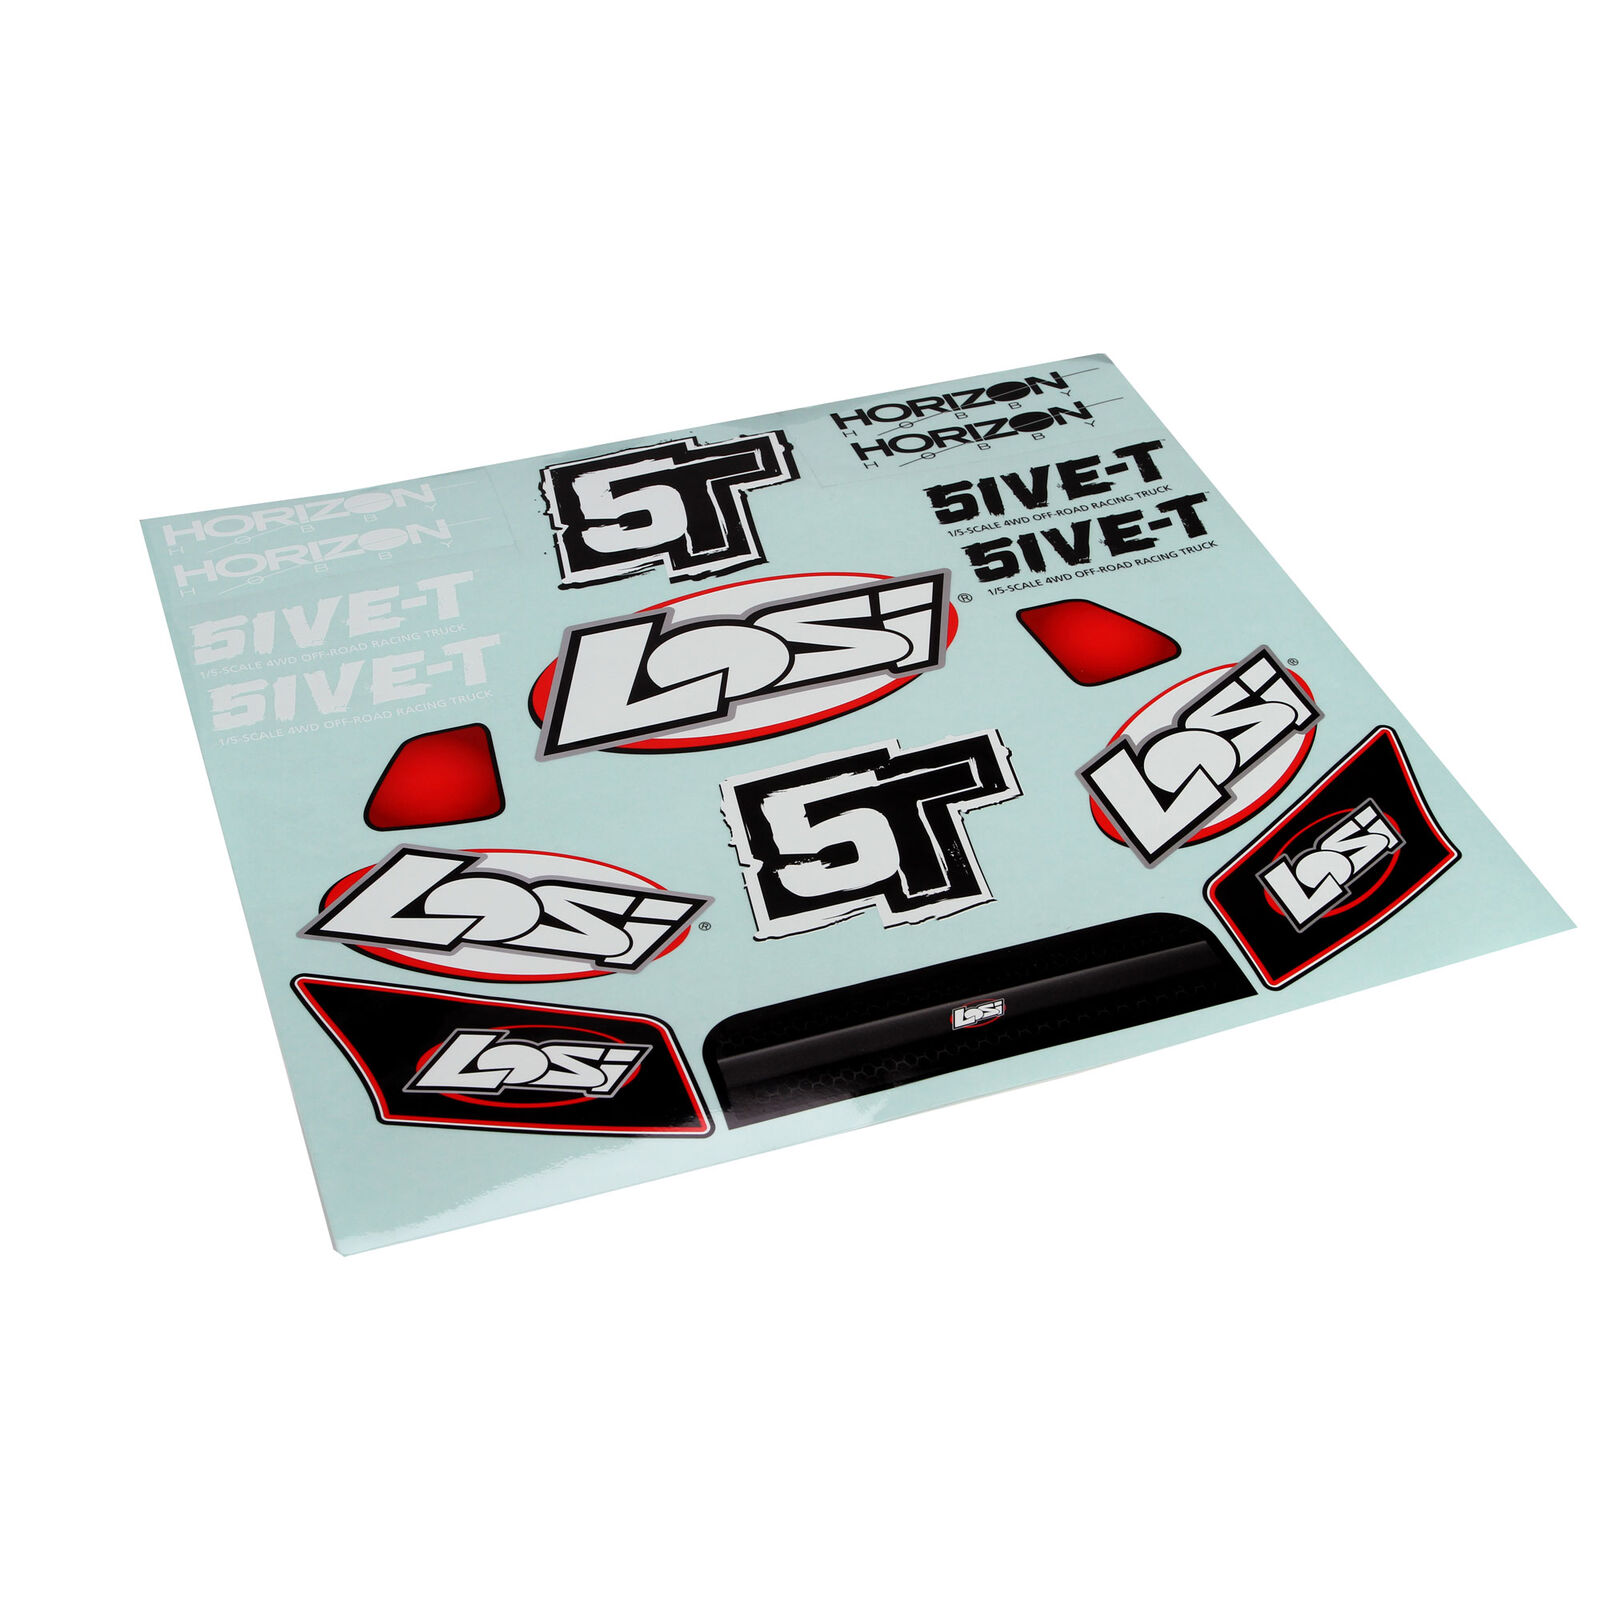 Grill, Lights & Logo Sticker Sheet: 5IVE-T